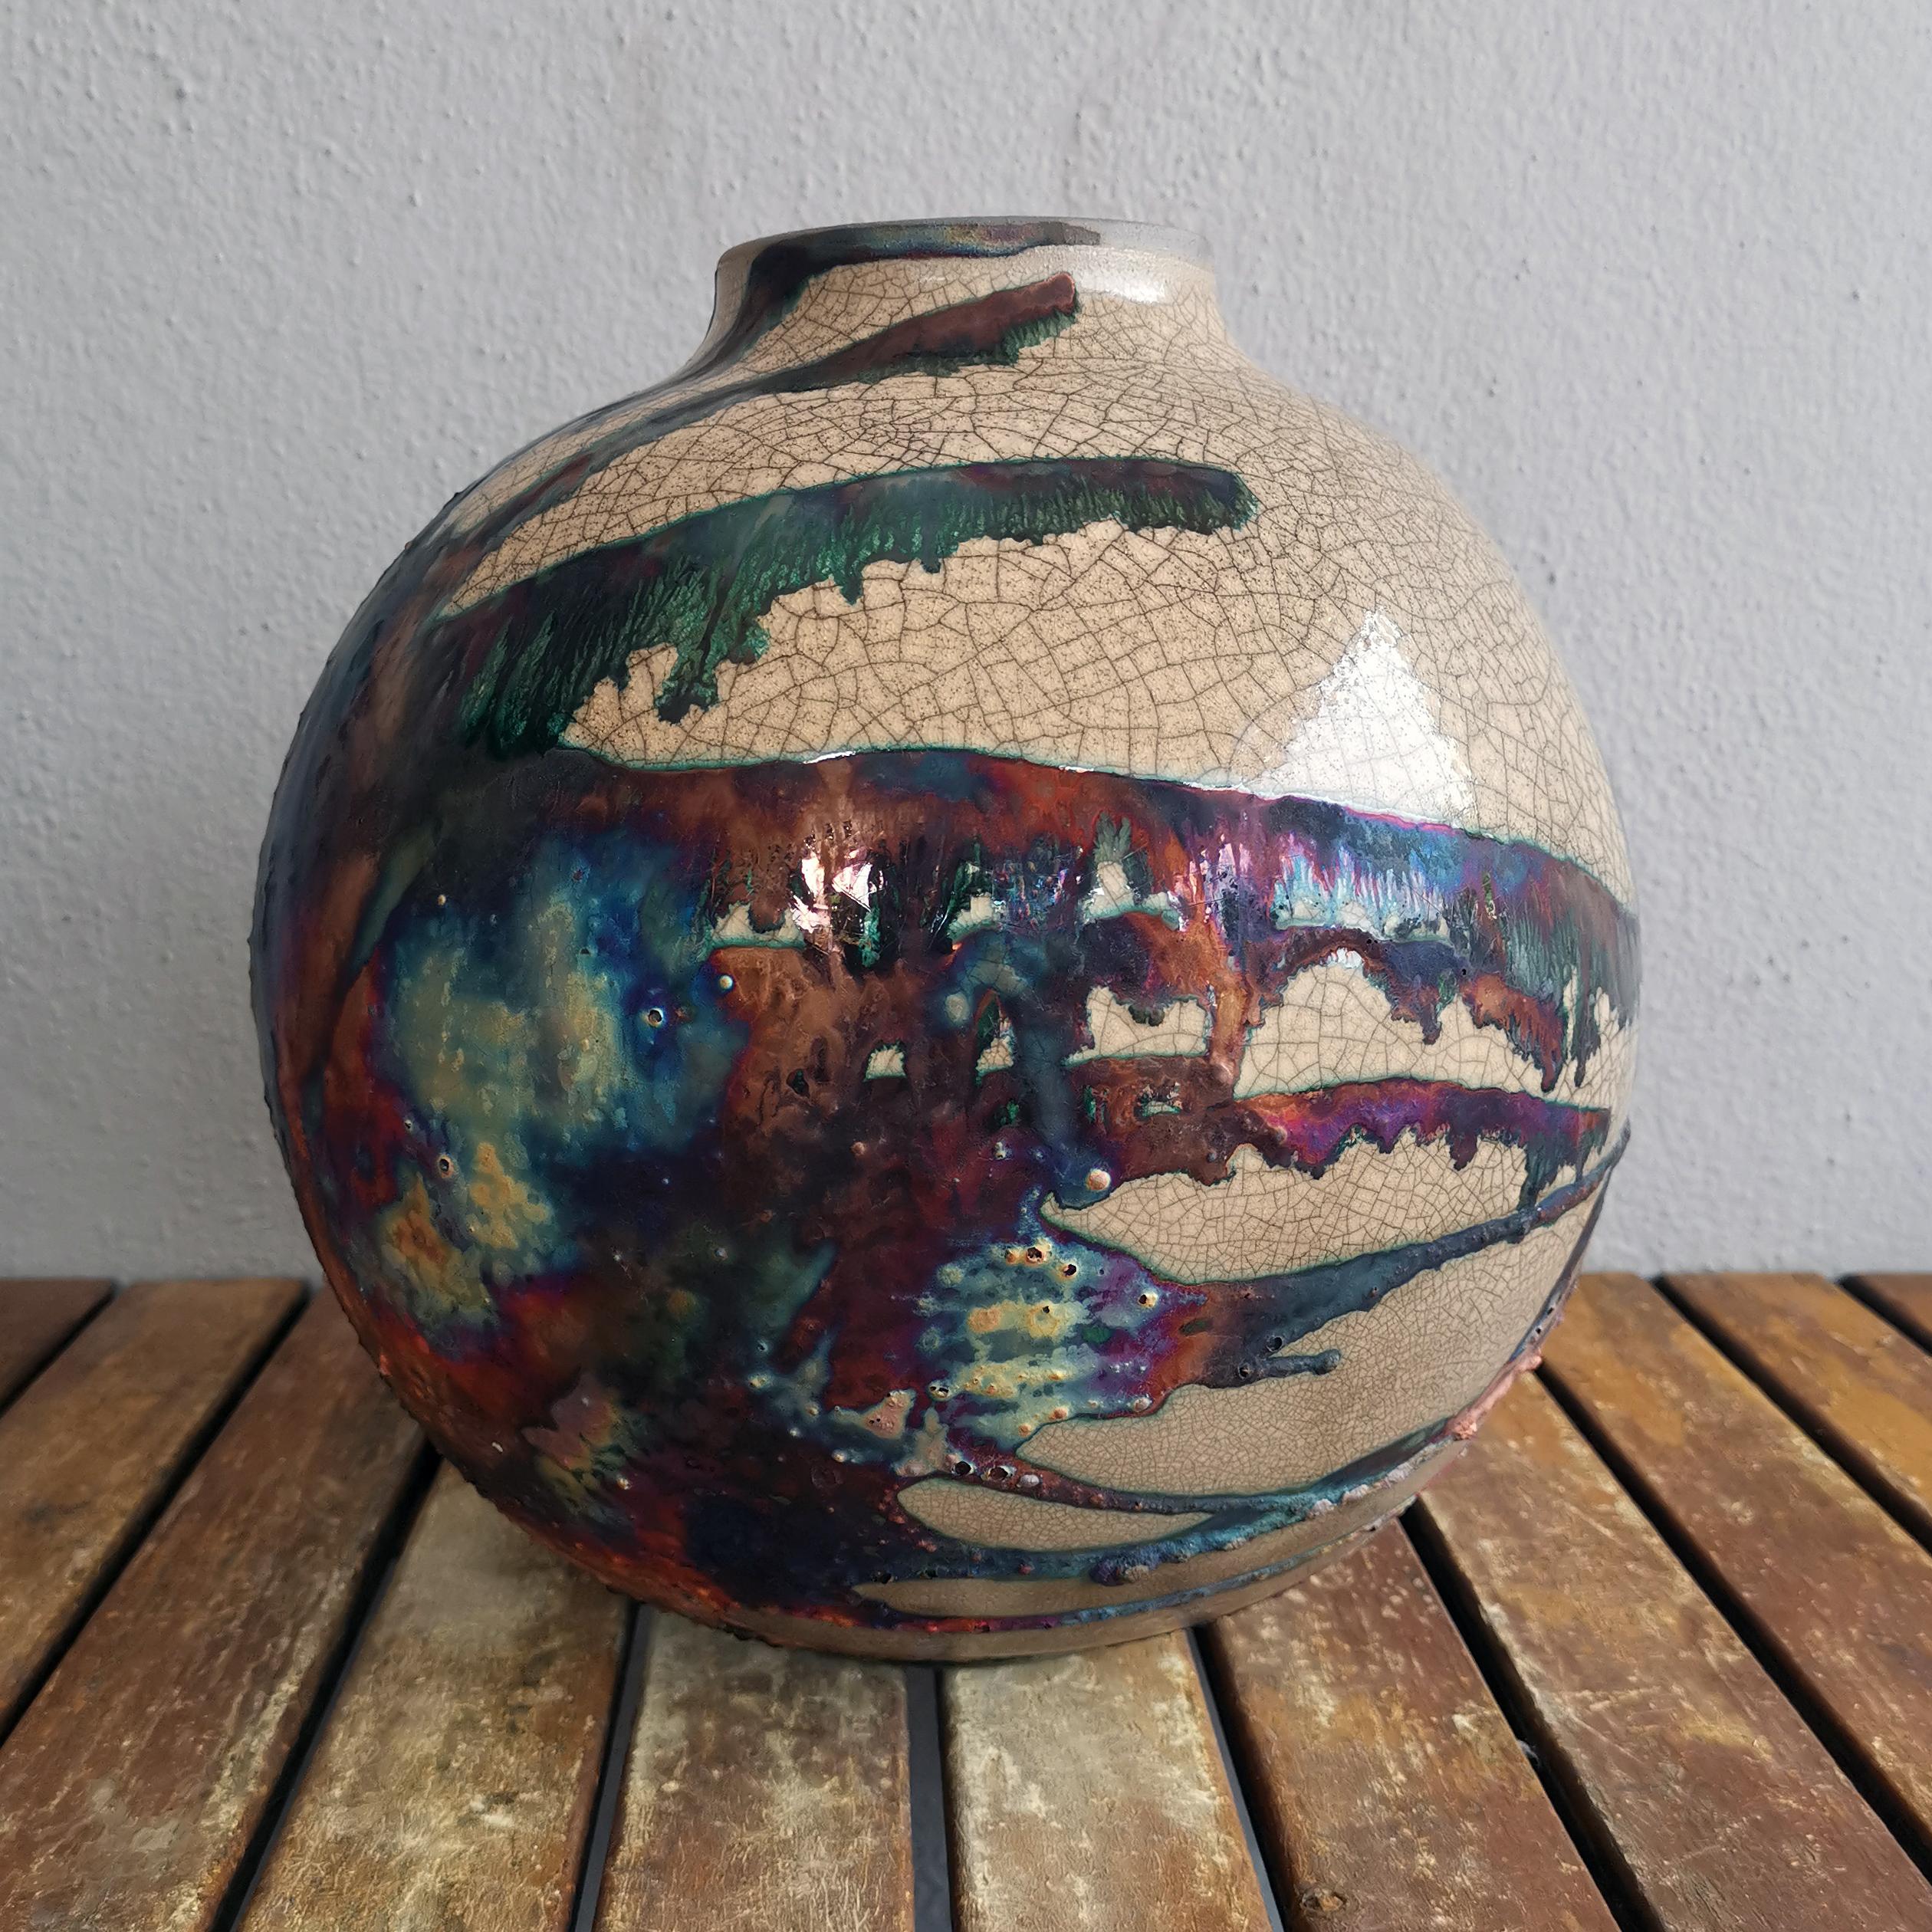 Malaysian Raaquu Raku Fired Large Globe Vase S/N0000570 Centerpiece Art Series